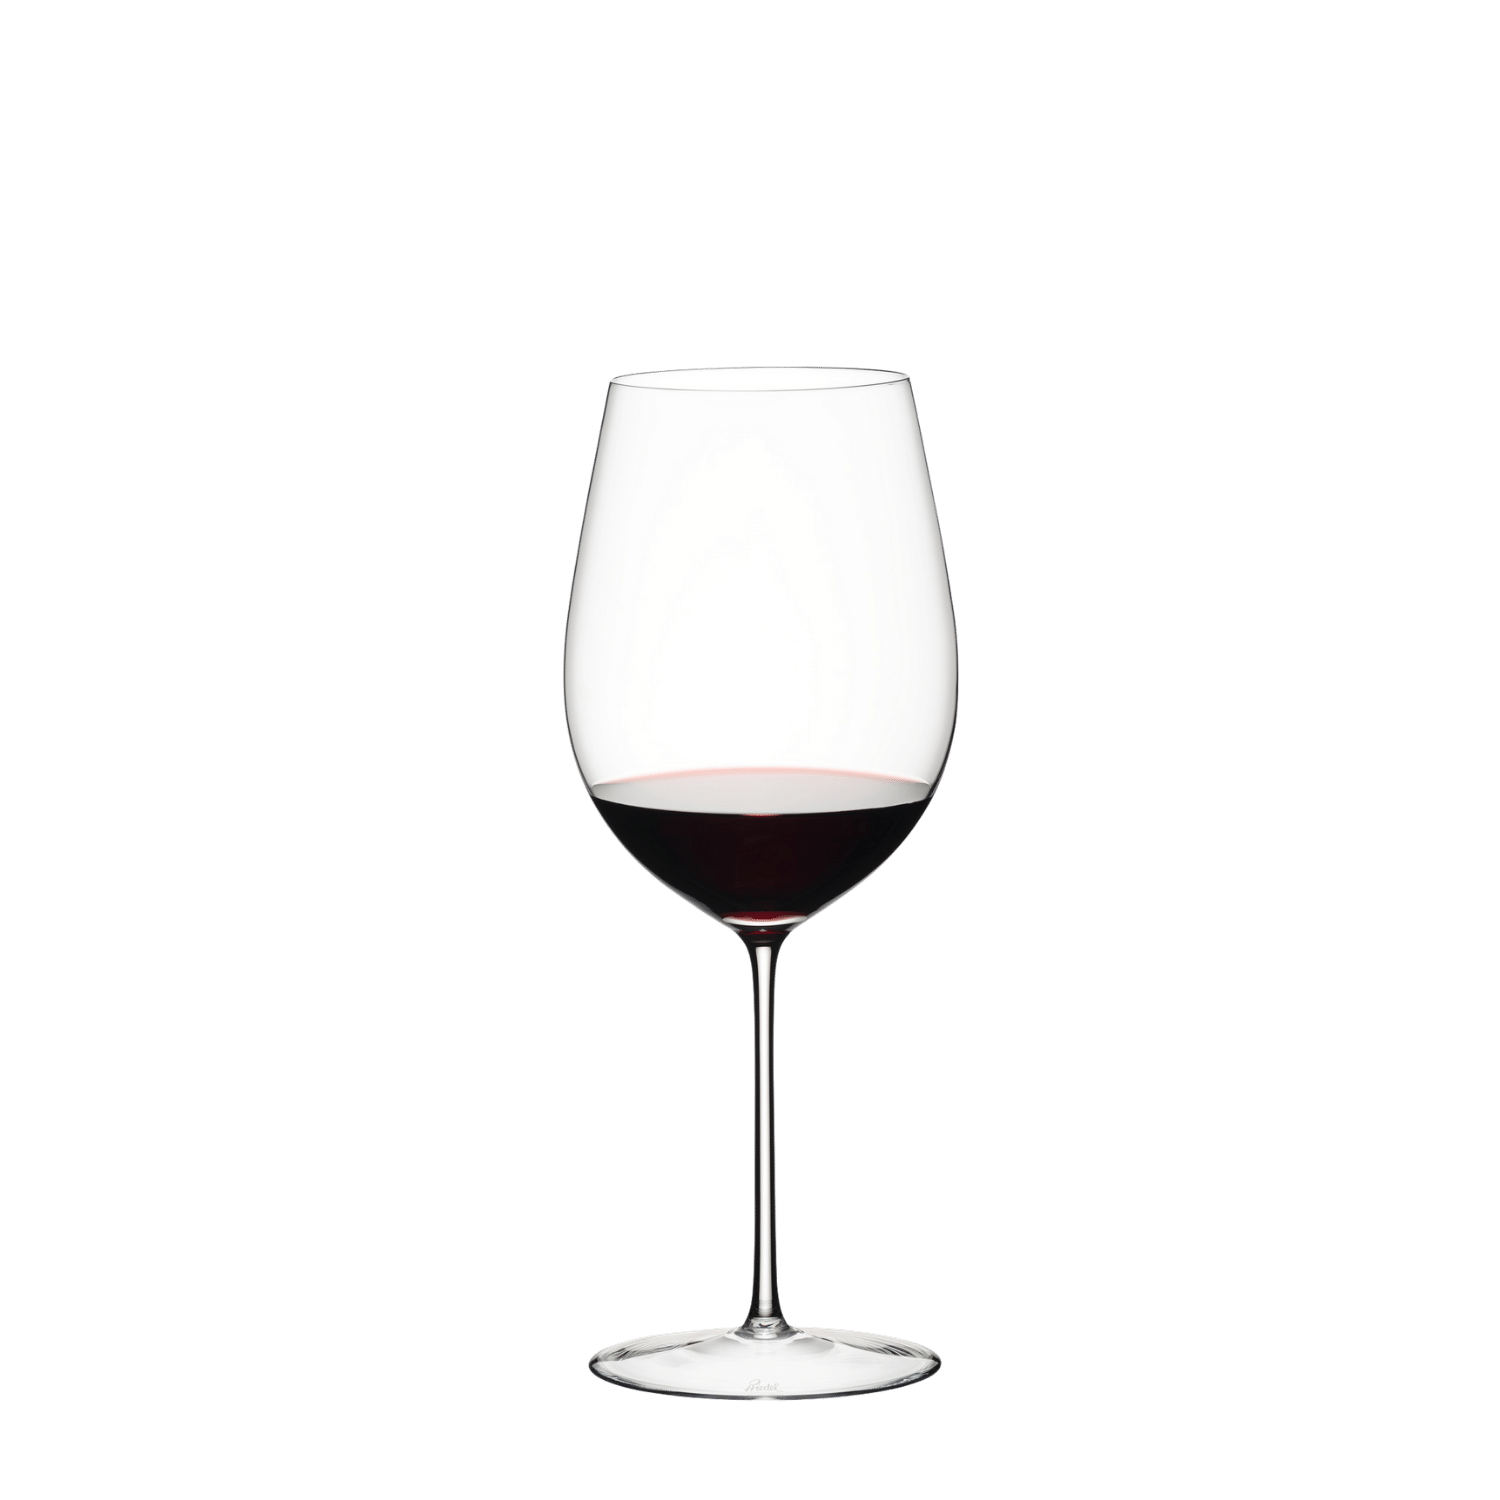 Riedel Sommeliers Burgundy Grand Cru Glass